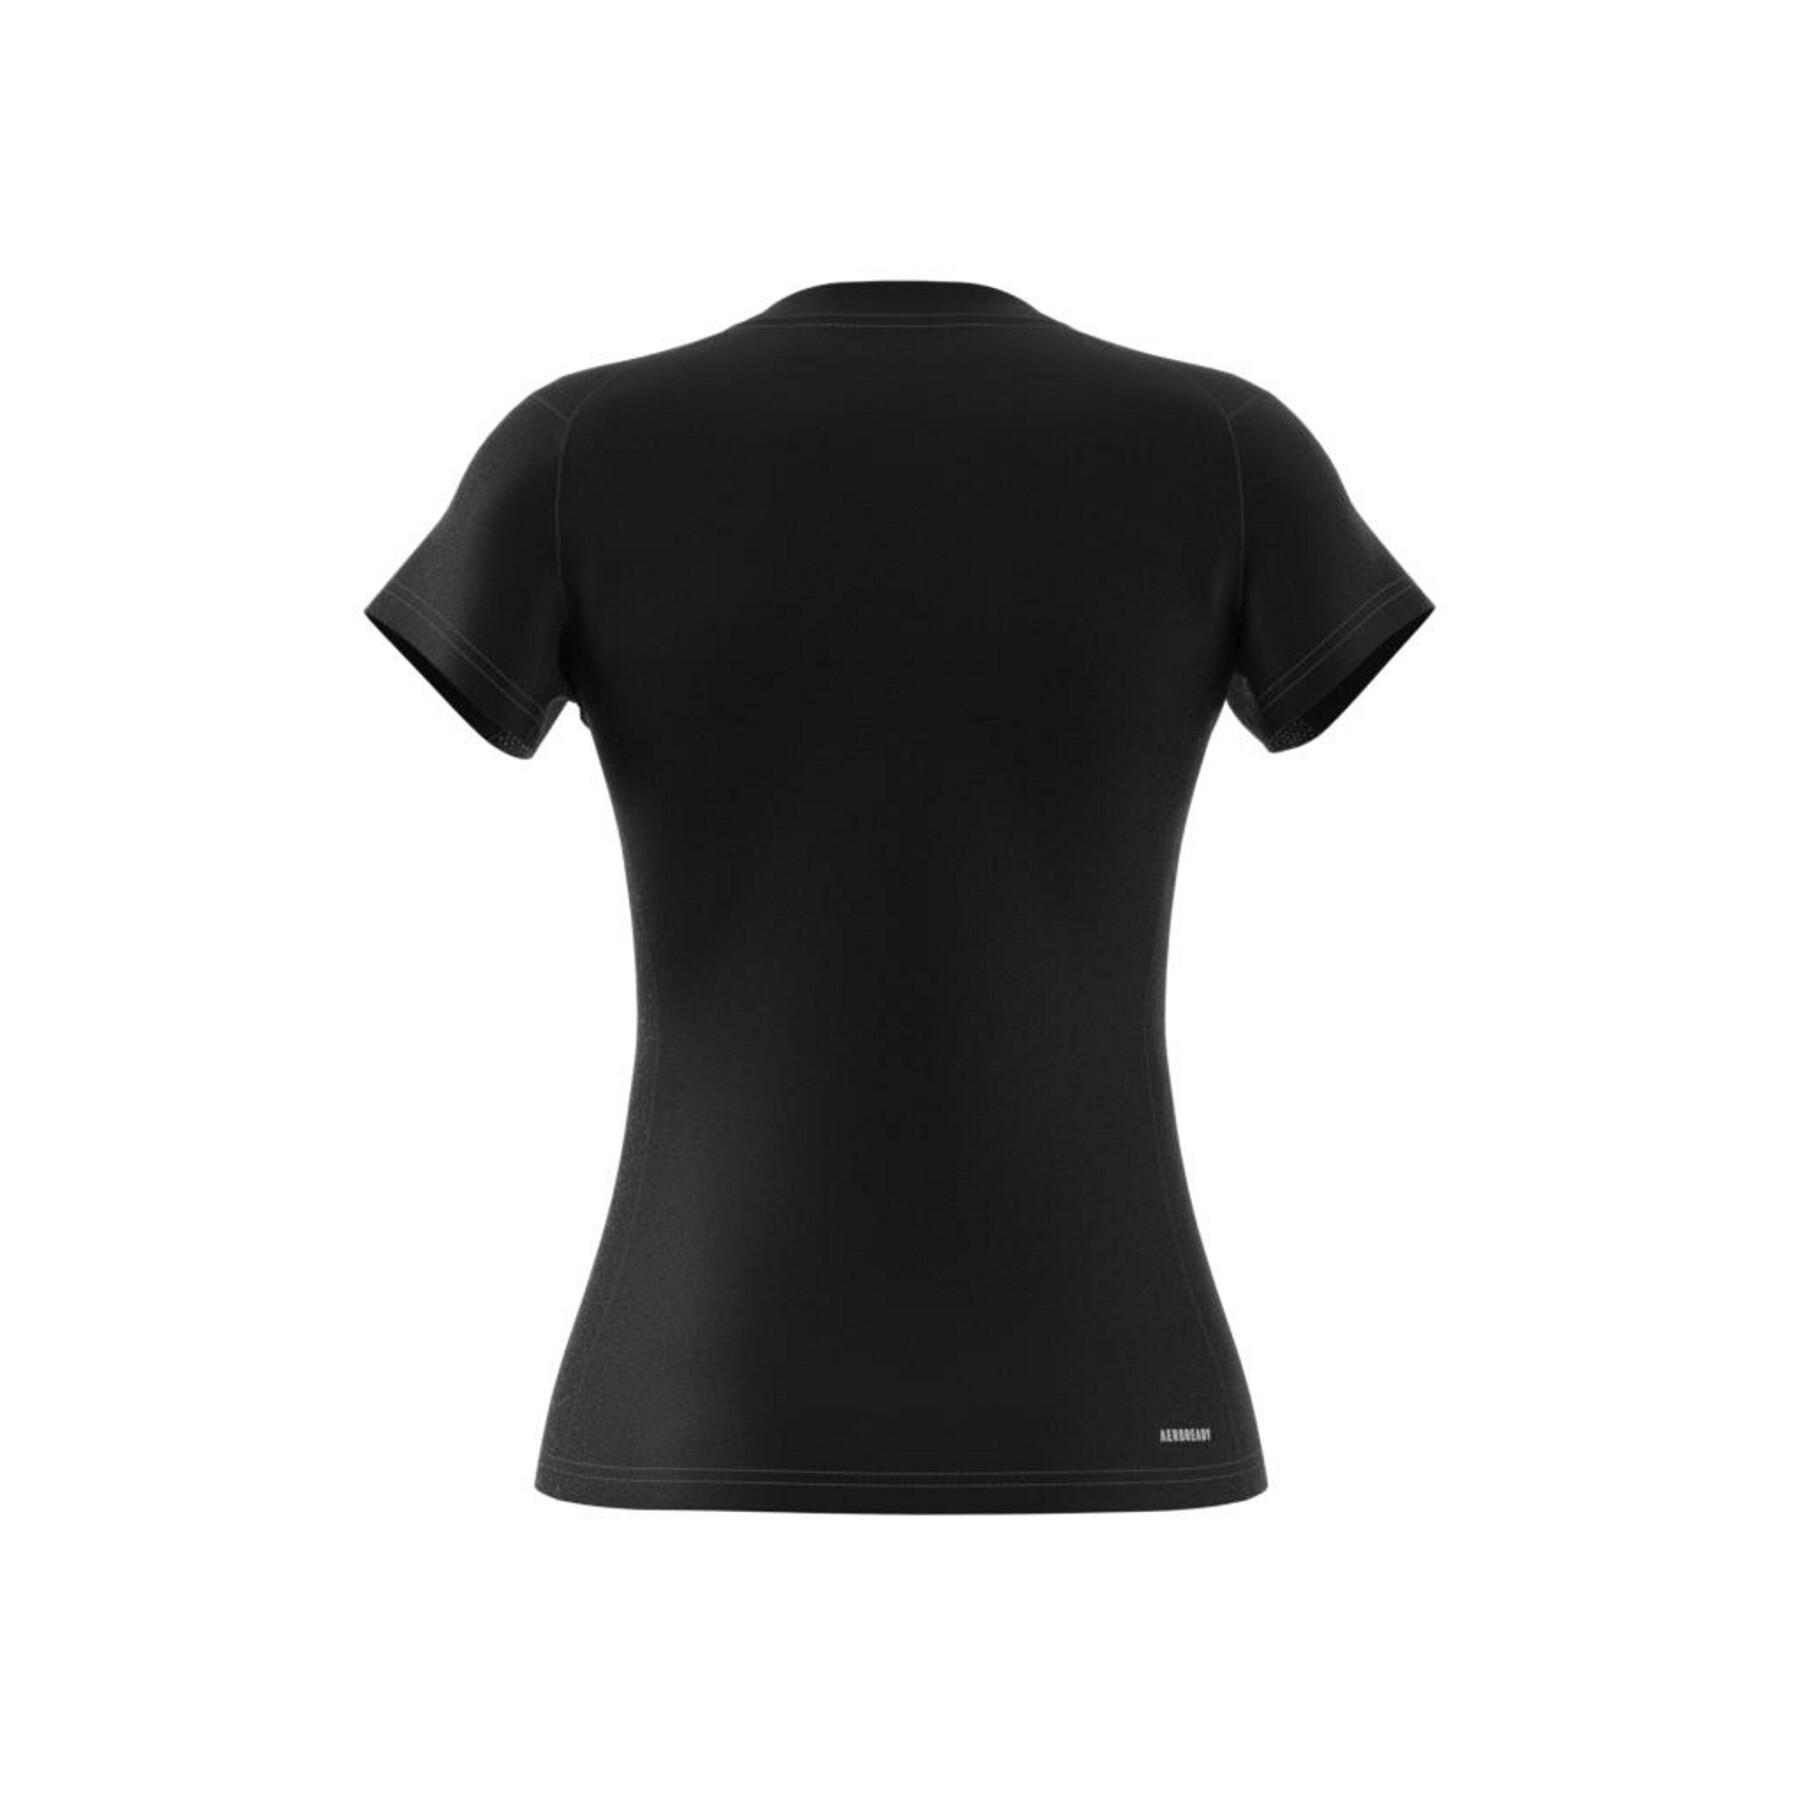 Women's T-shirt adidas Tennis Freelift